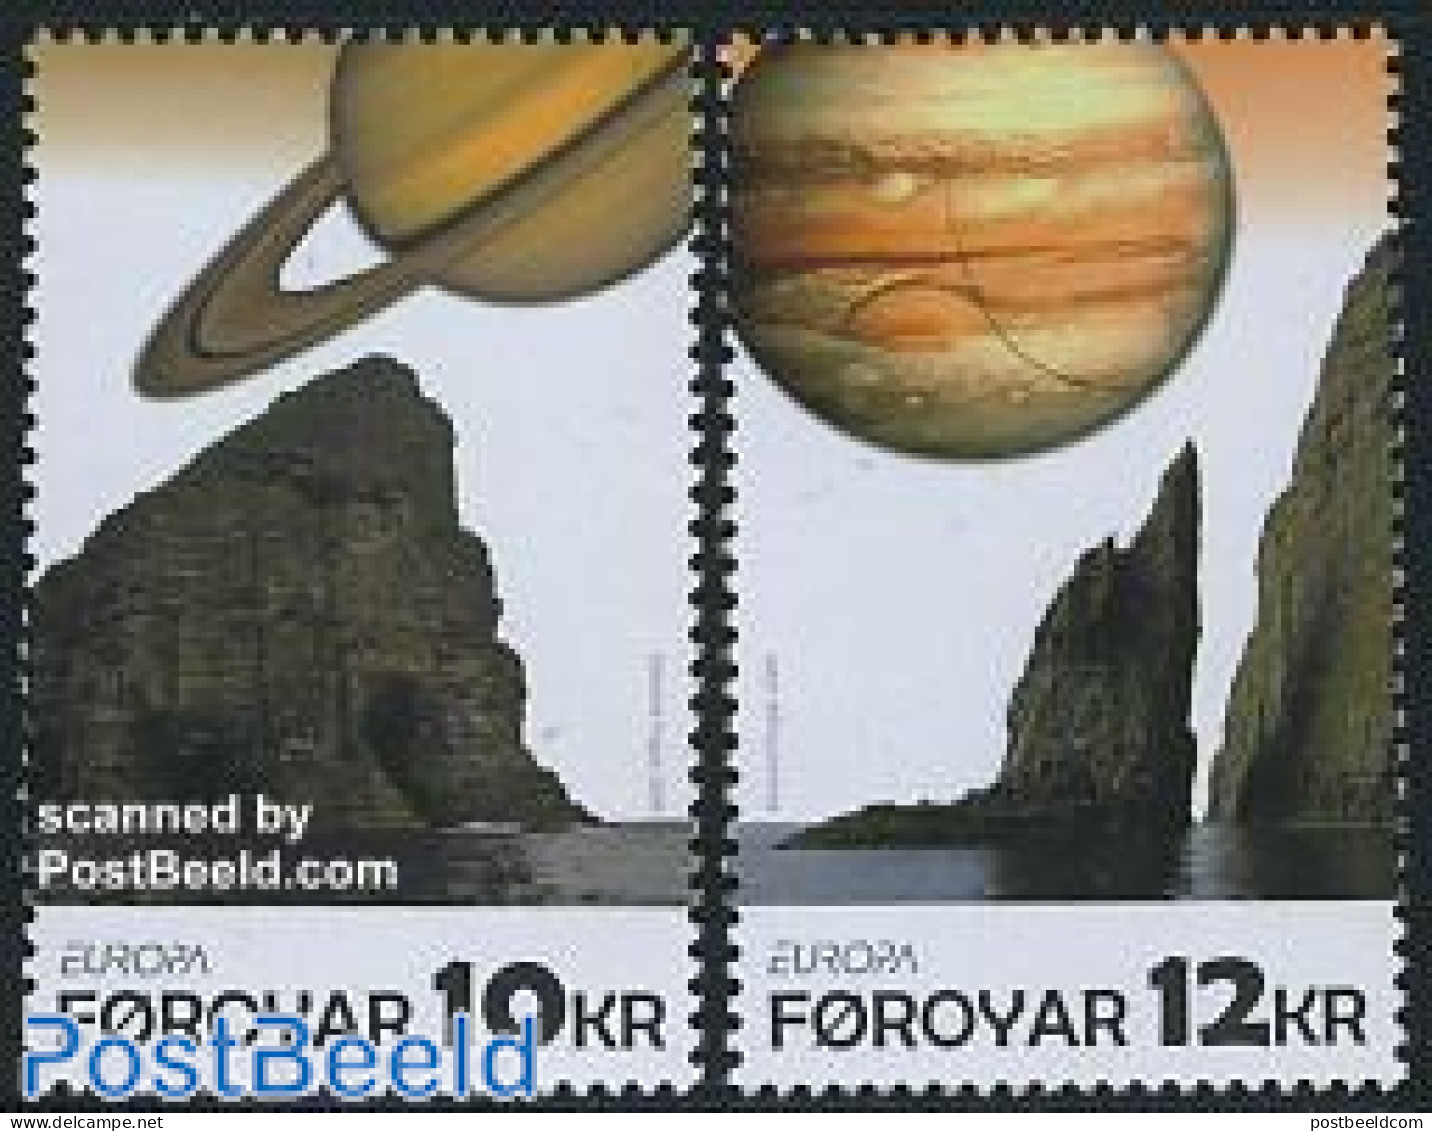 Faroe Islands 2009 Europa, Astronomy 2v, Mint NH, History - Science - Europa (cept) - Astronomy - Astrology